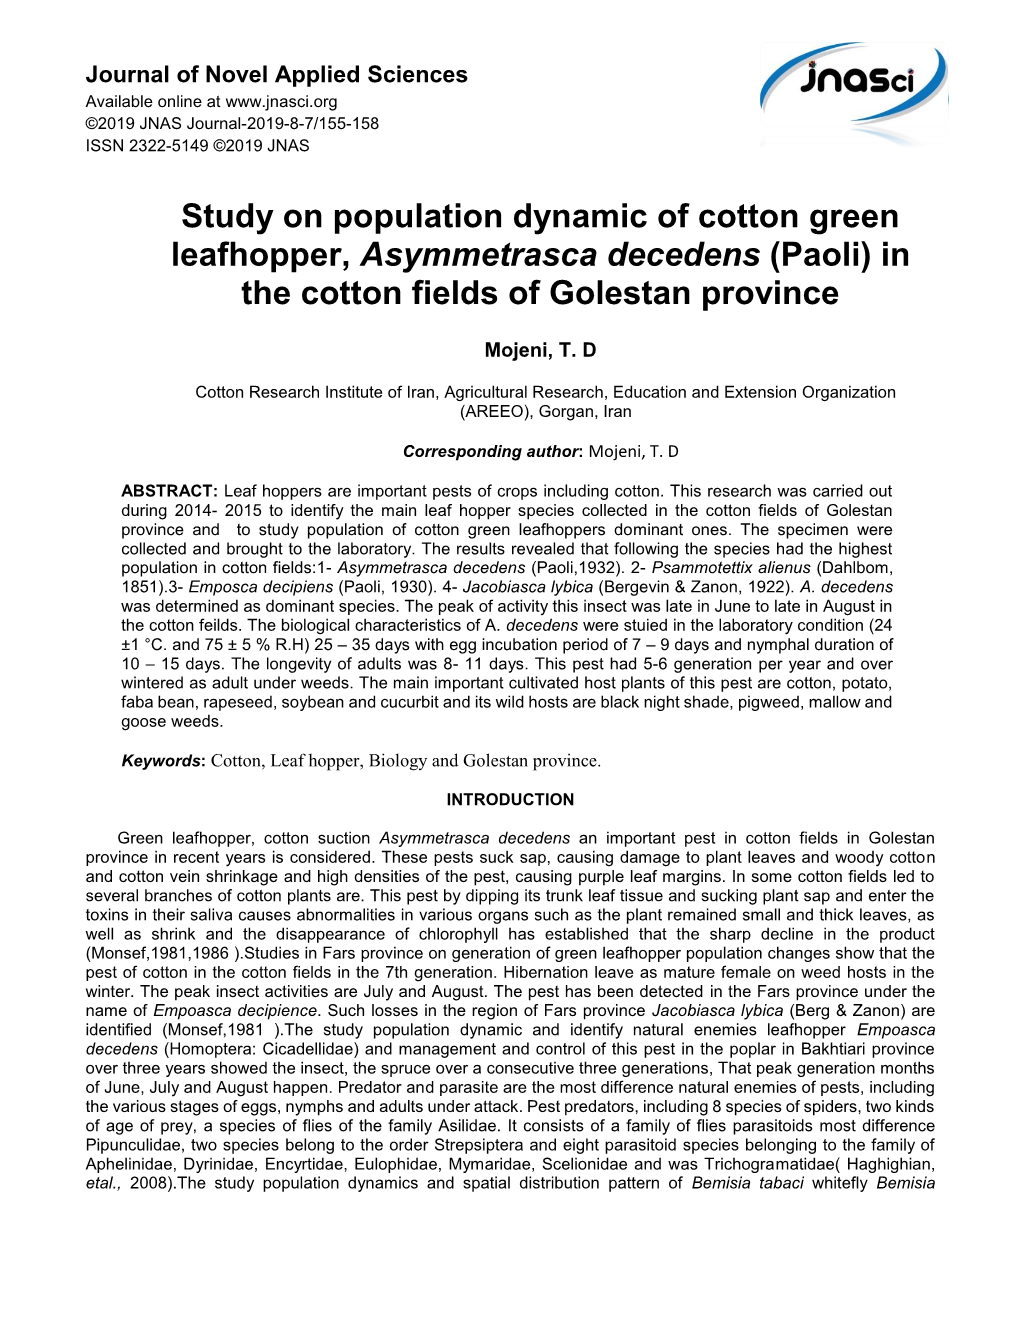 Study on Population Dynamic of Cotton Green Leafhopper, Asymmetrasca Decedens (Paoli) in the Cotton Fields of Golestan Province